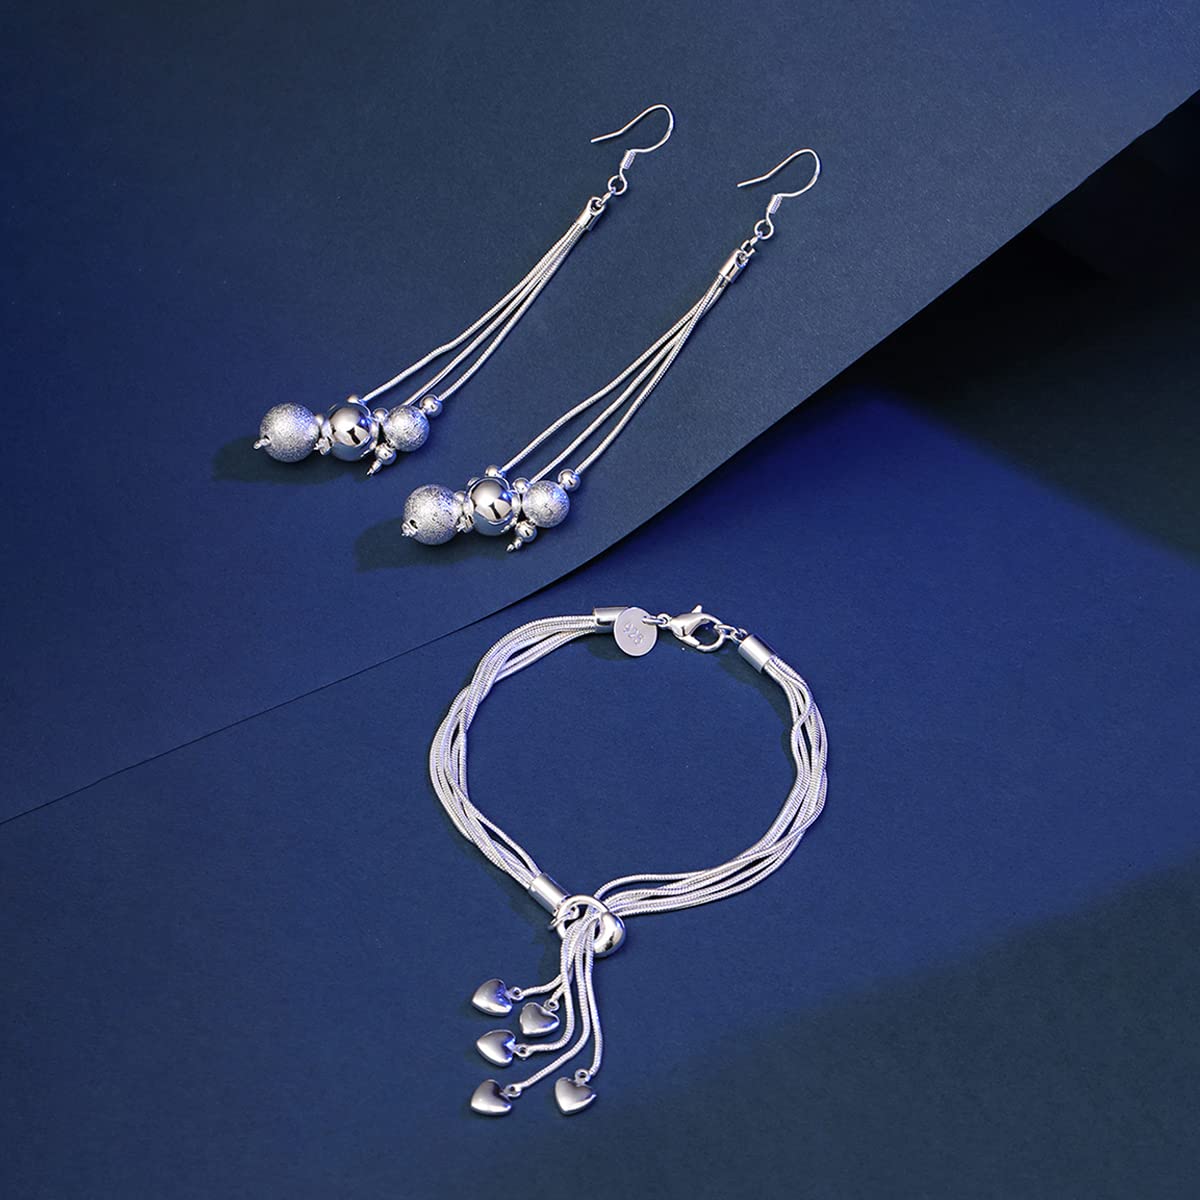 The Beating Heart Asymmetrical Cuff Earrings Chain Ear Cuff Clip Jewelry  Gift | eBay